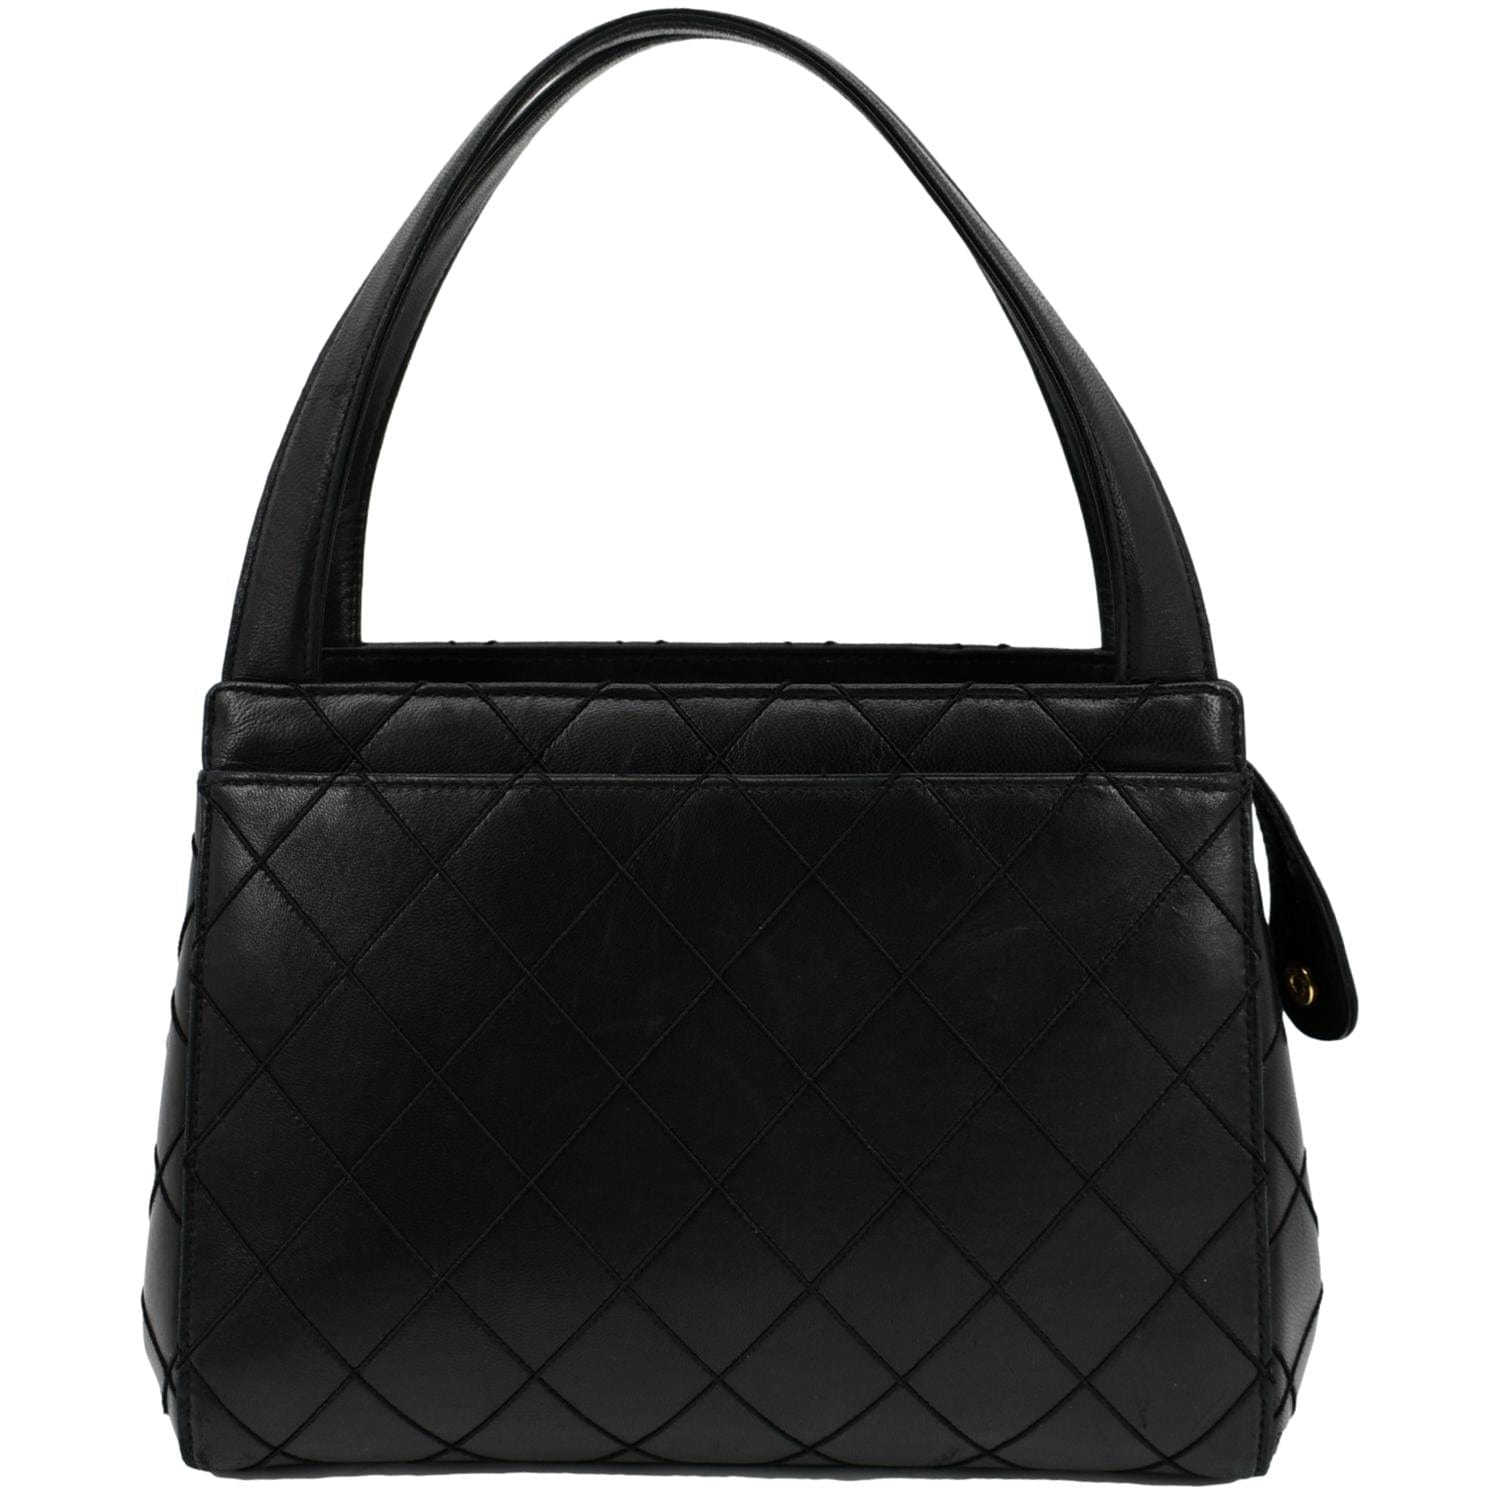 Chanel Small Vintage Lambskin Leather Handbag in Black